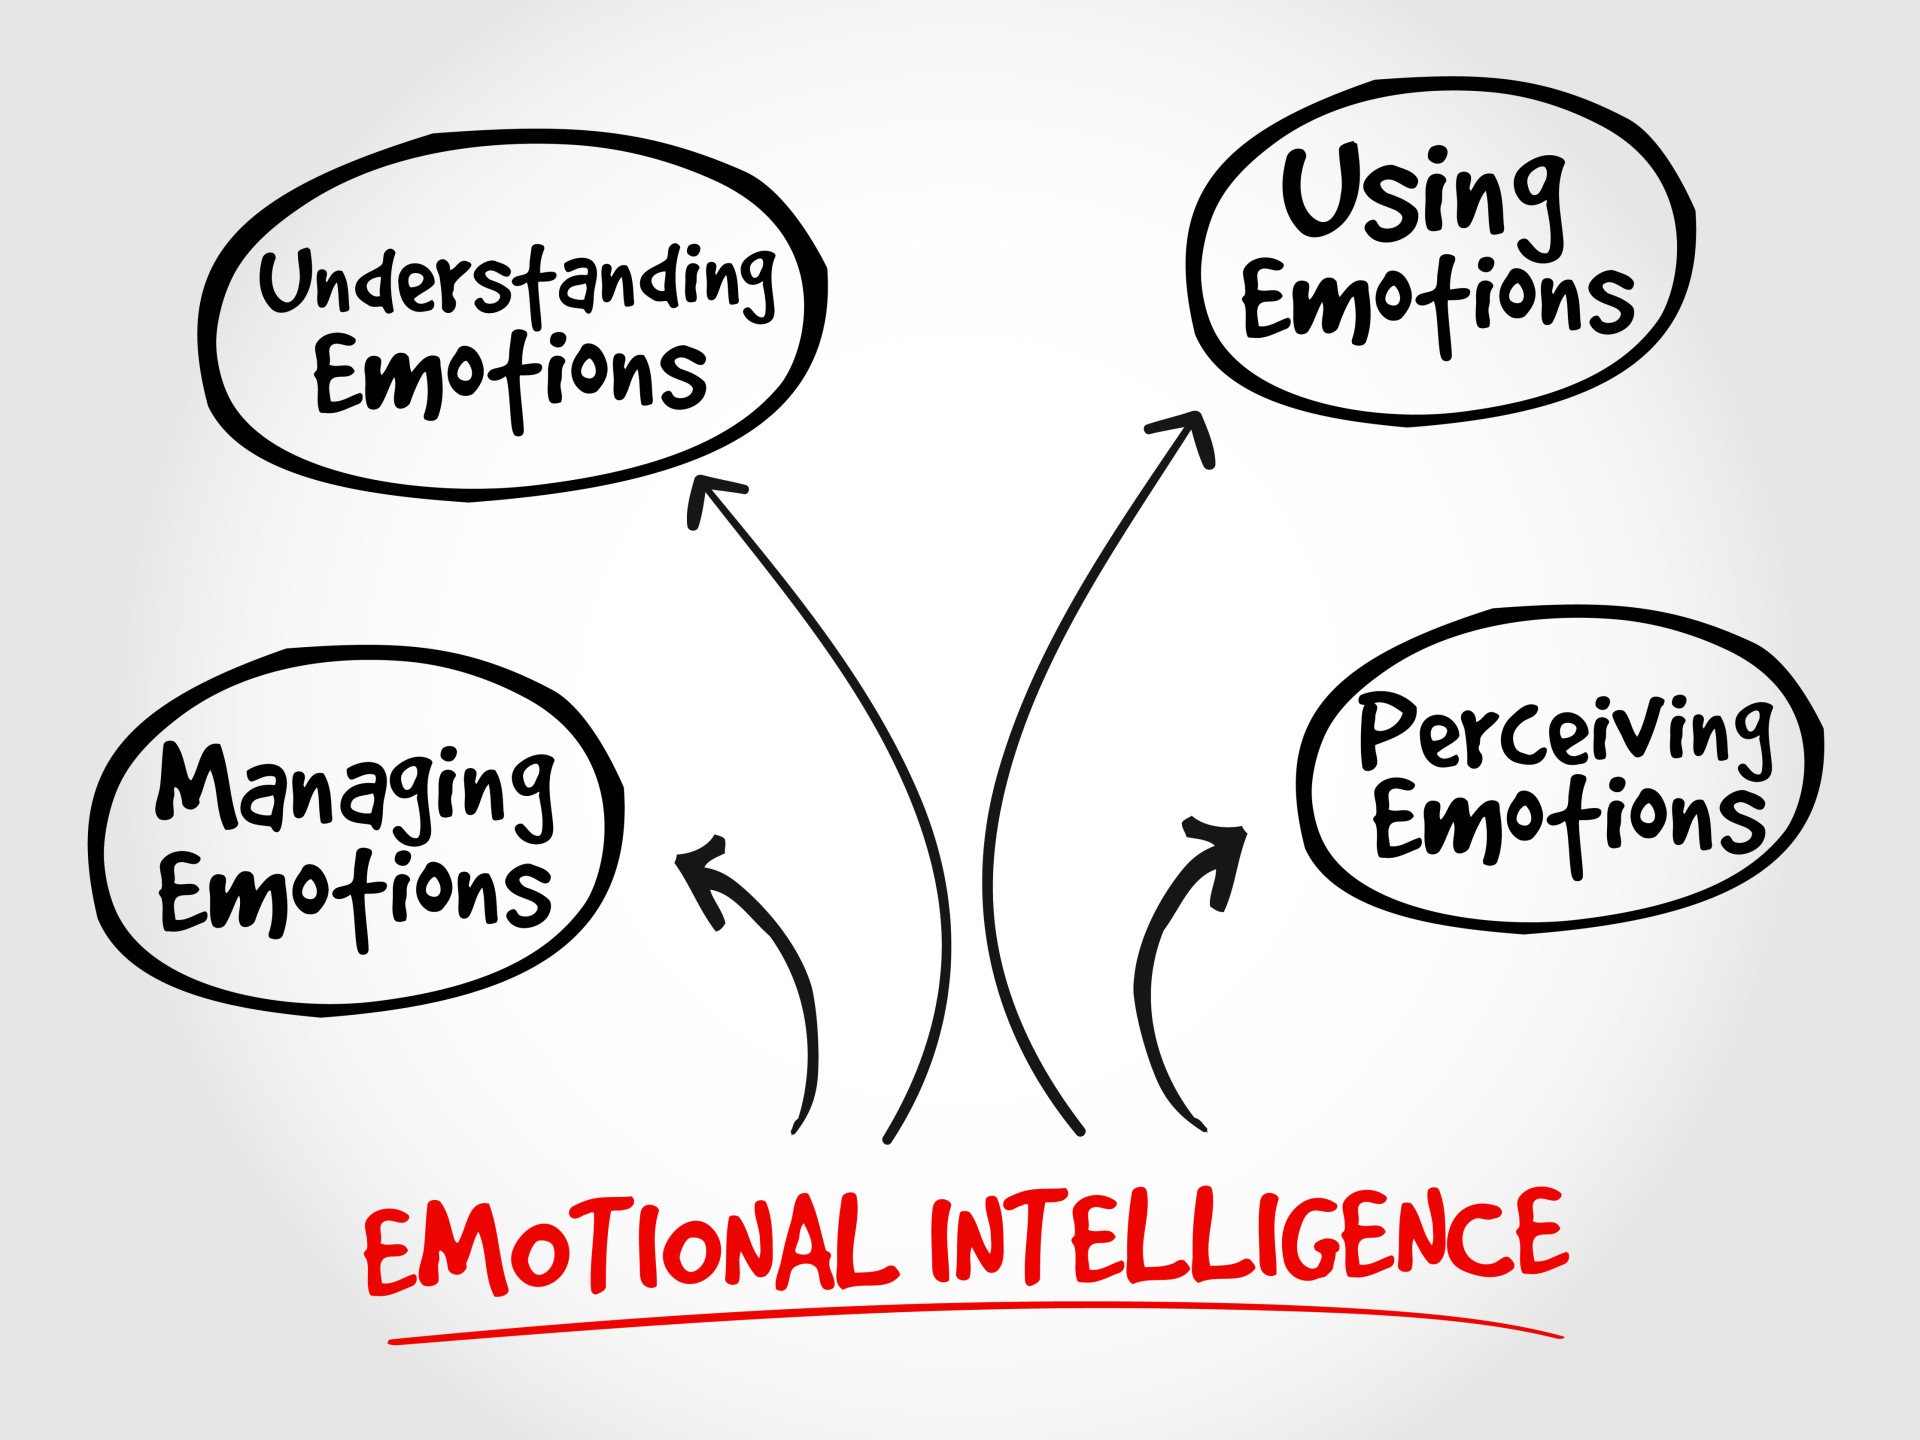 Emotional Intelligence Components